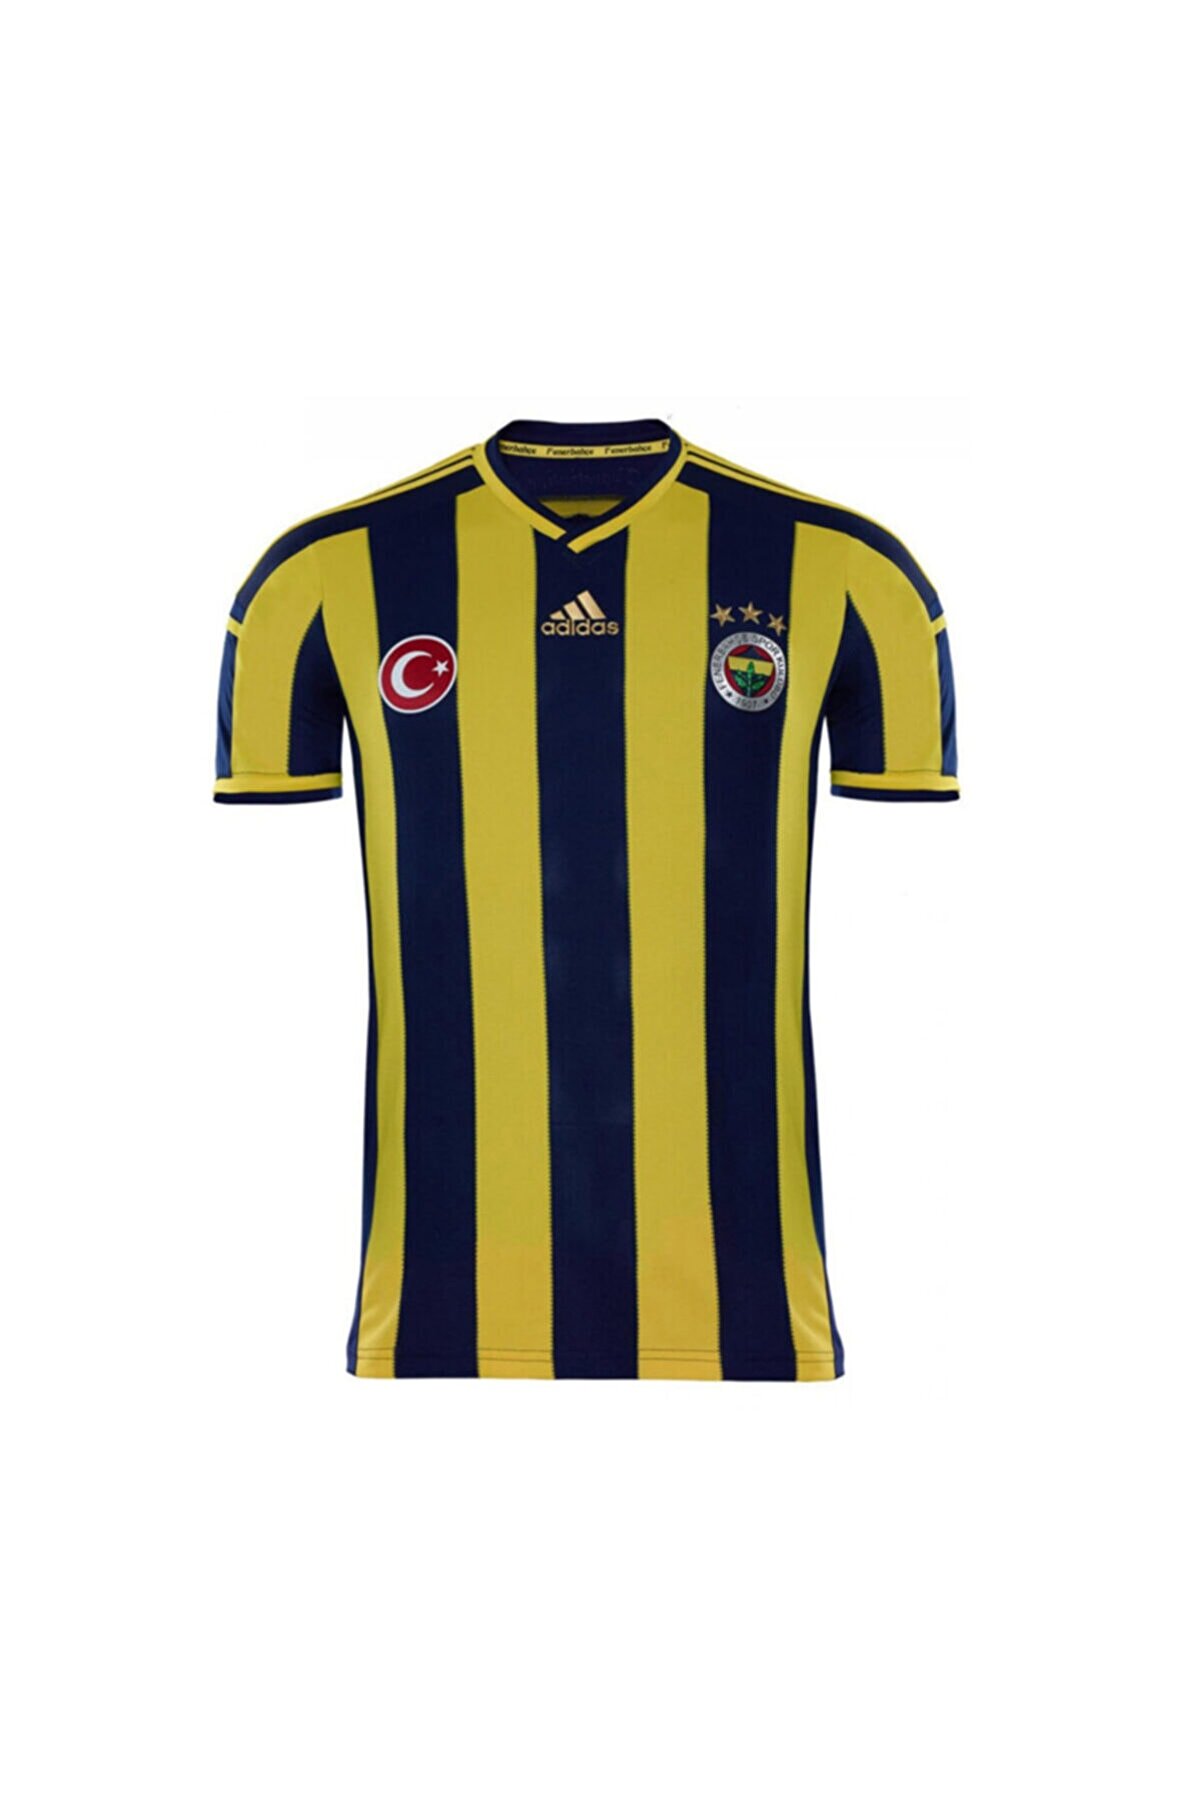 Fenerbahçe Lacivert Fenerbahçe Çubuklu Forma 2014